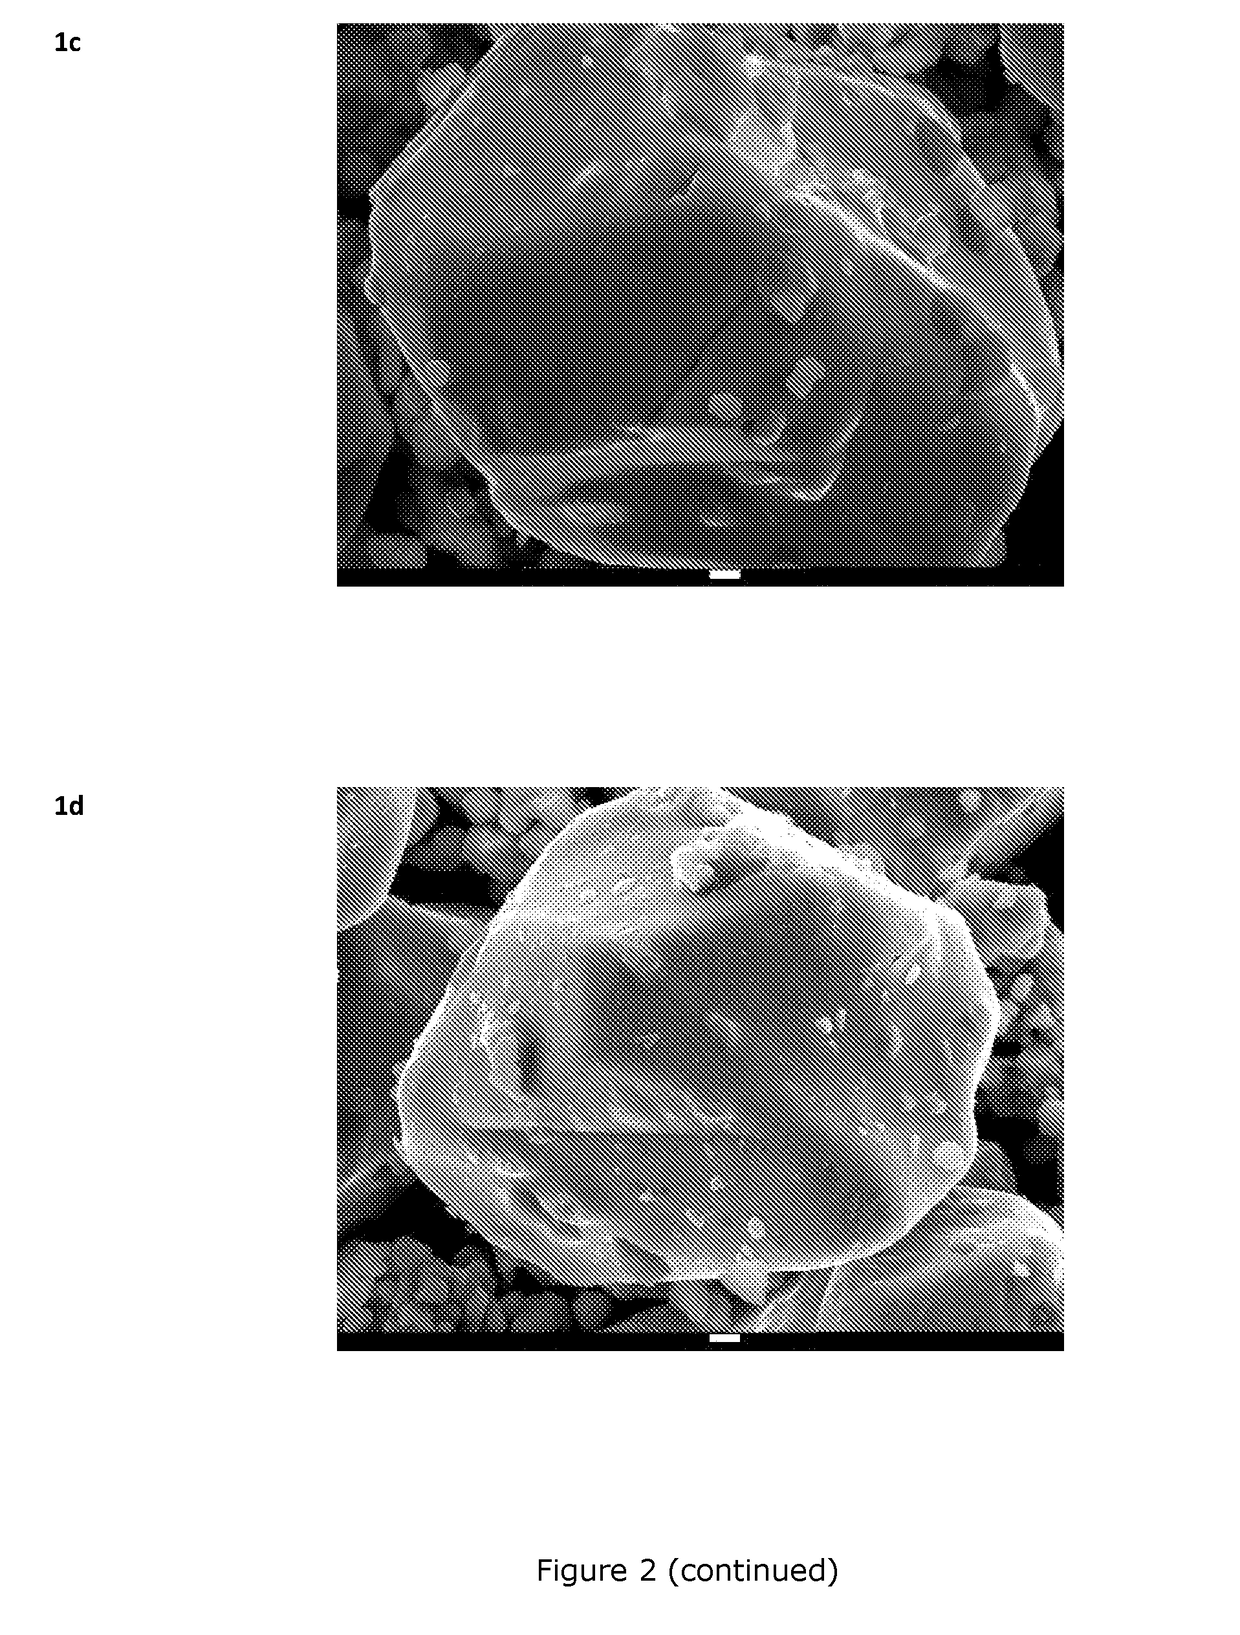 Cobalt-Based Lithium Metal Oxide Cathode Material